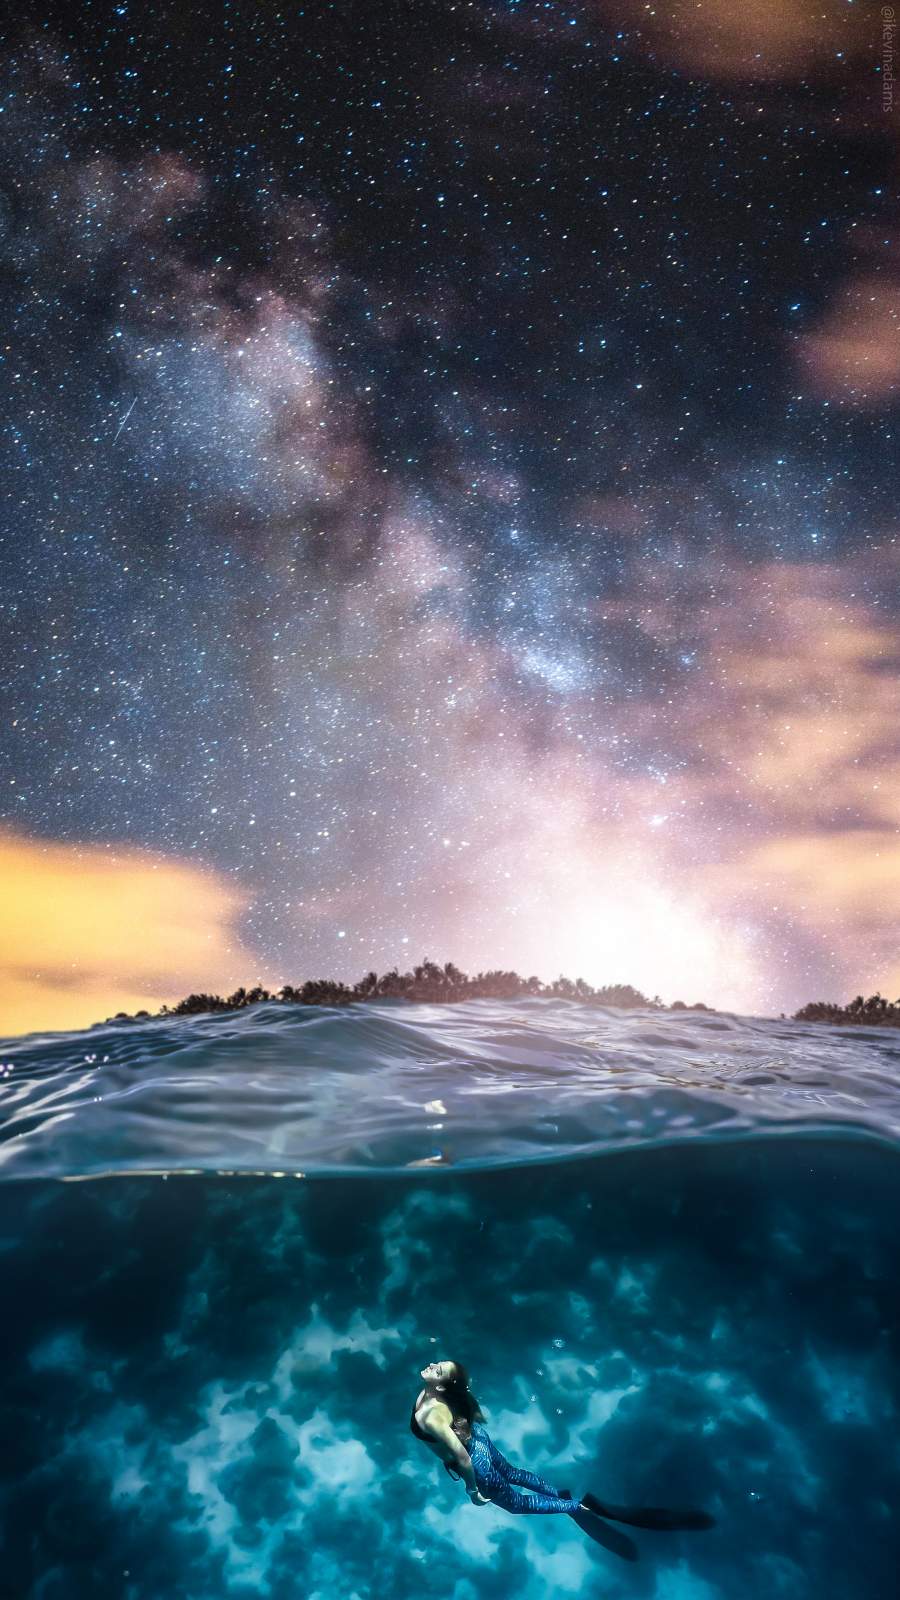 Ocean Dreams iPhone Wallpaper